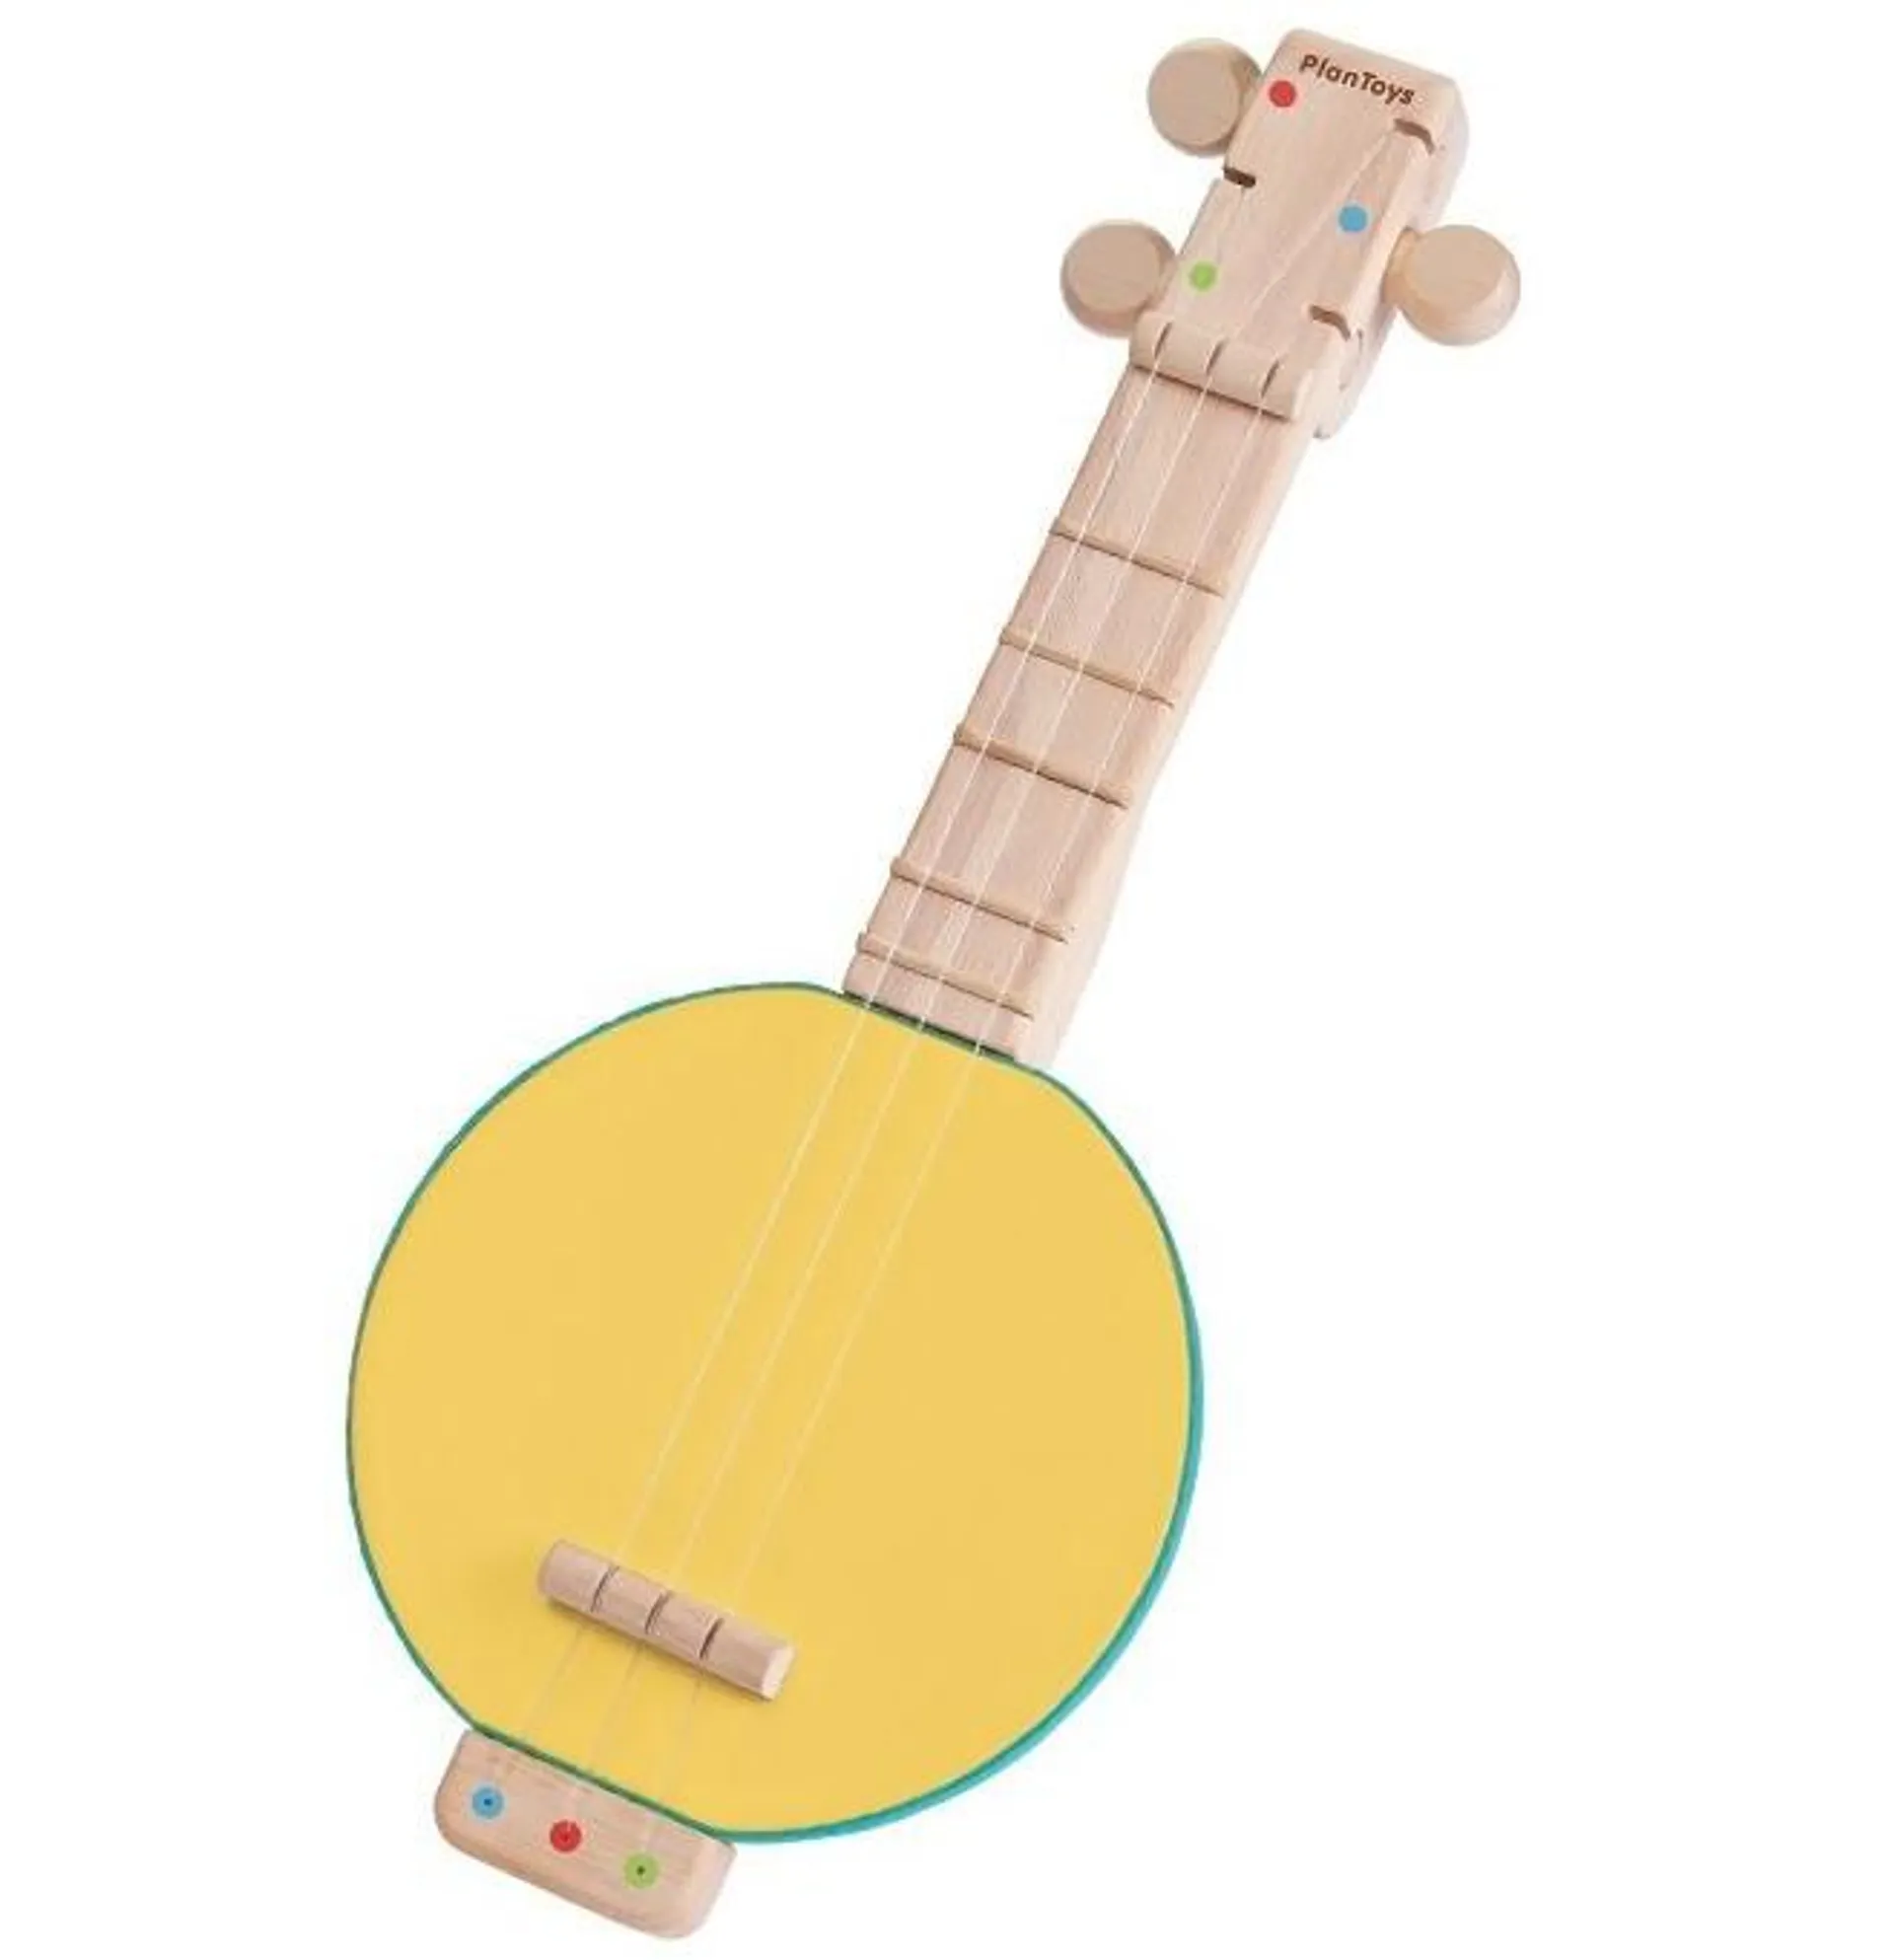 Plan Toys Banjo Wooden Musical Instrument